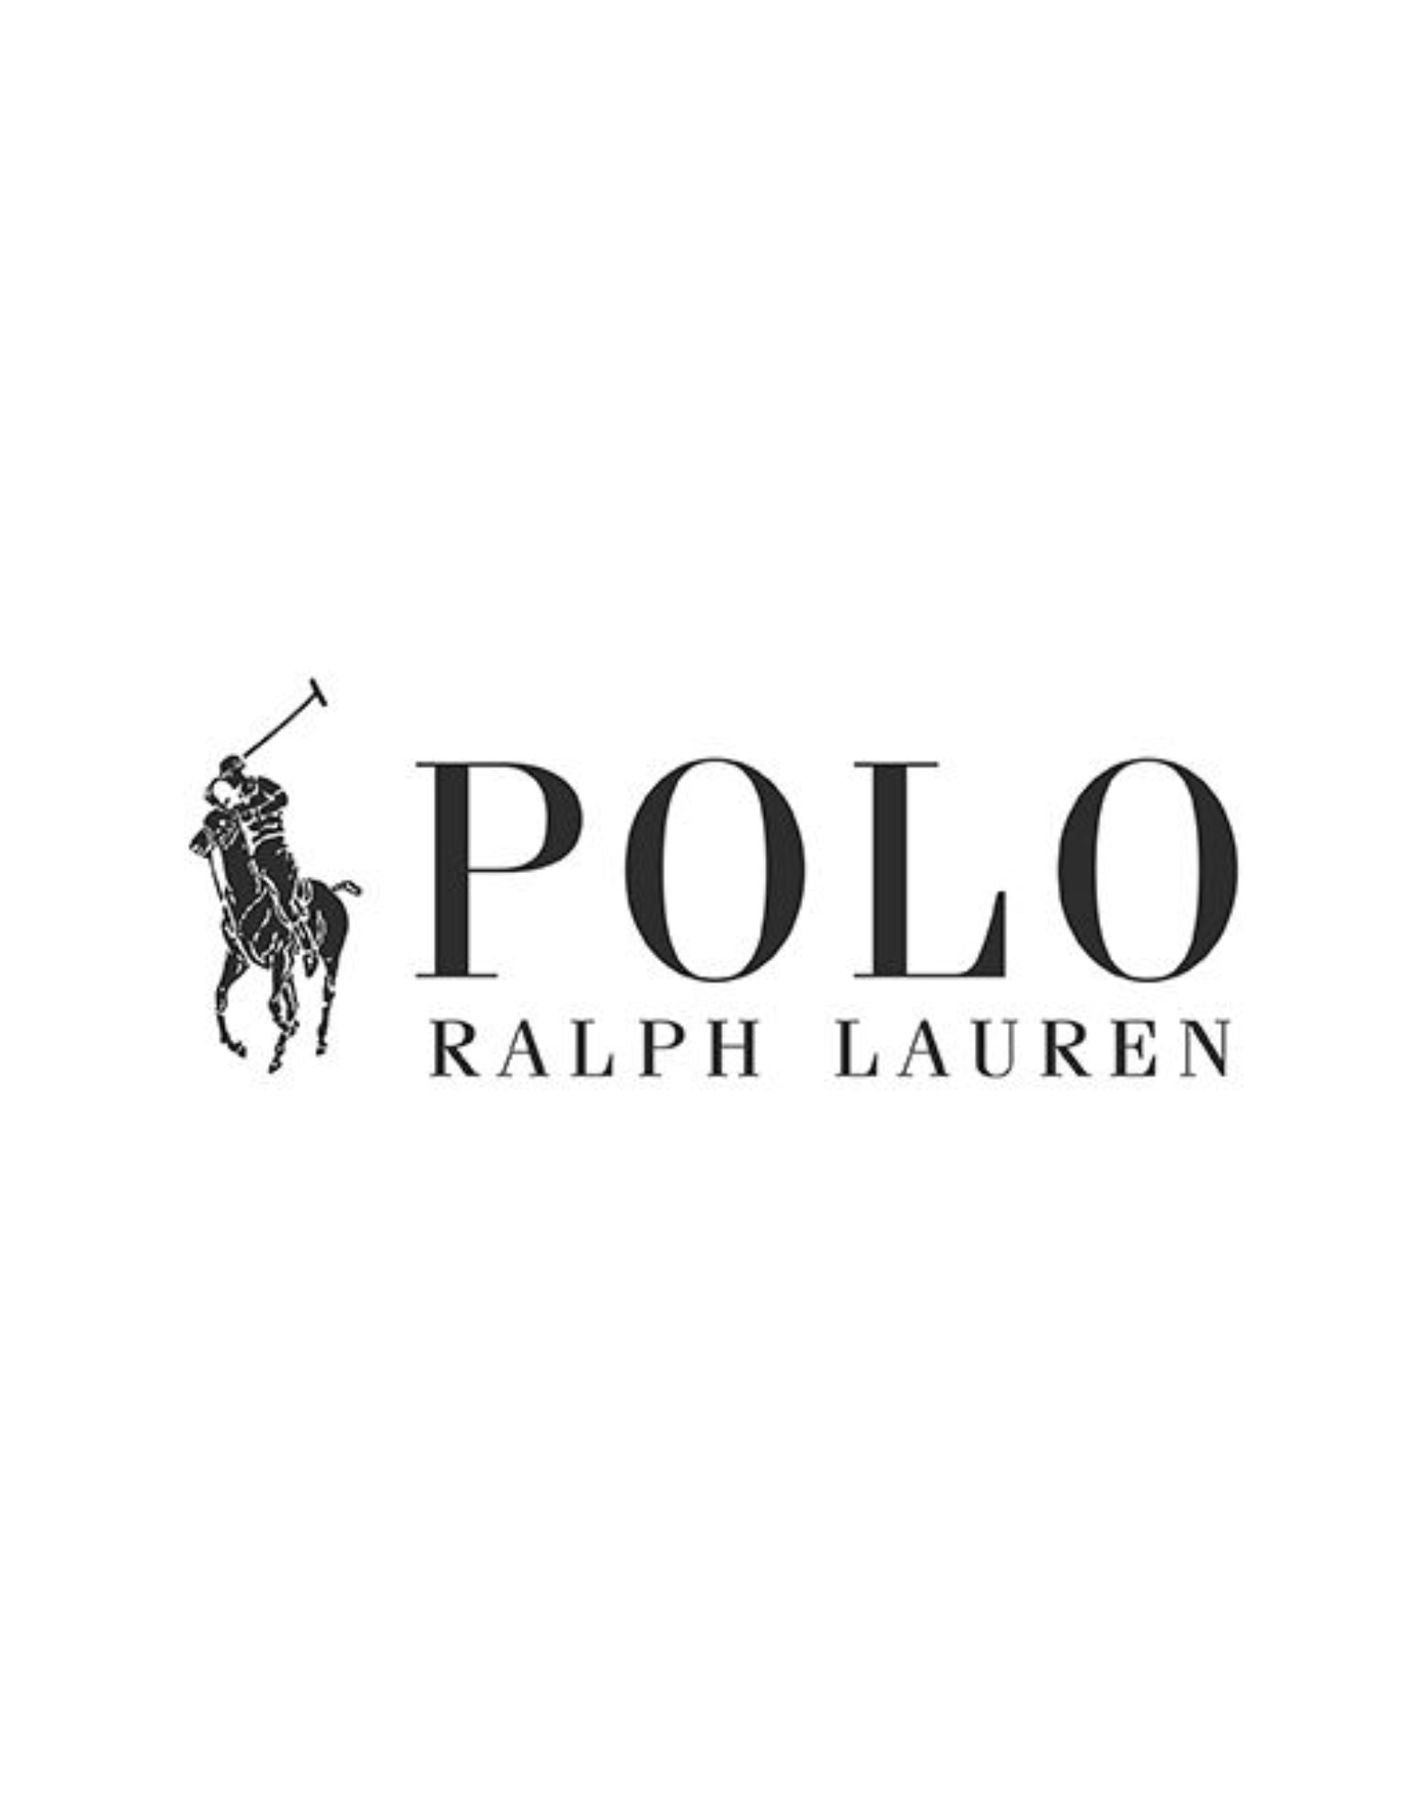 T-shirt for man 714844756004 WHITE Polo Ralph Lauren